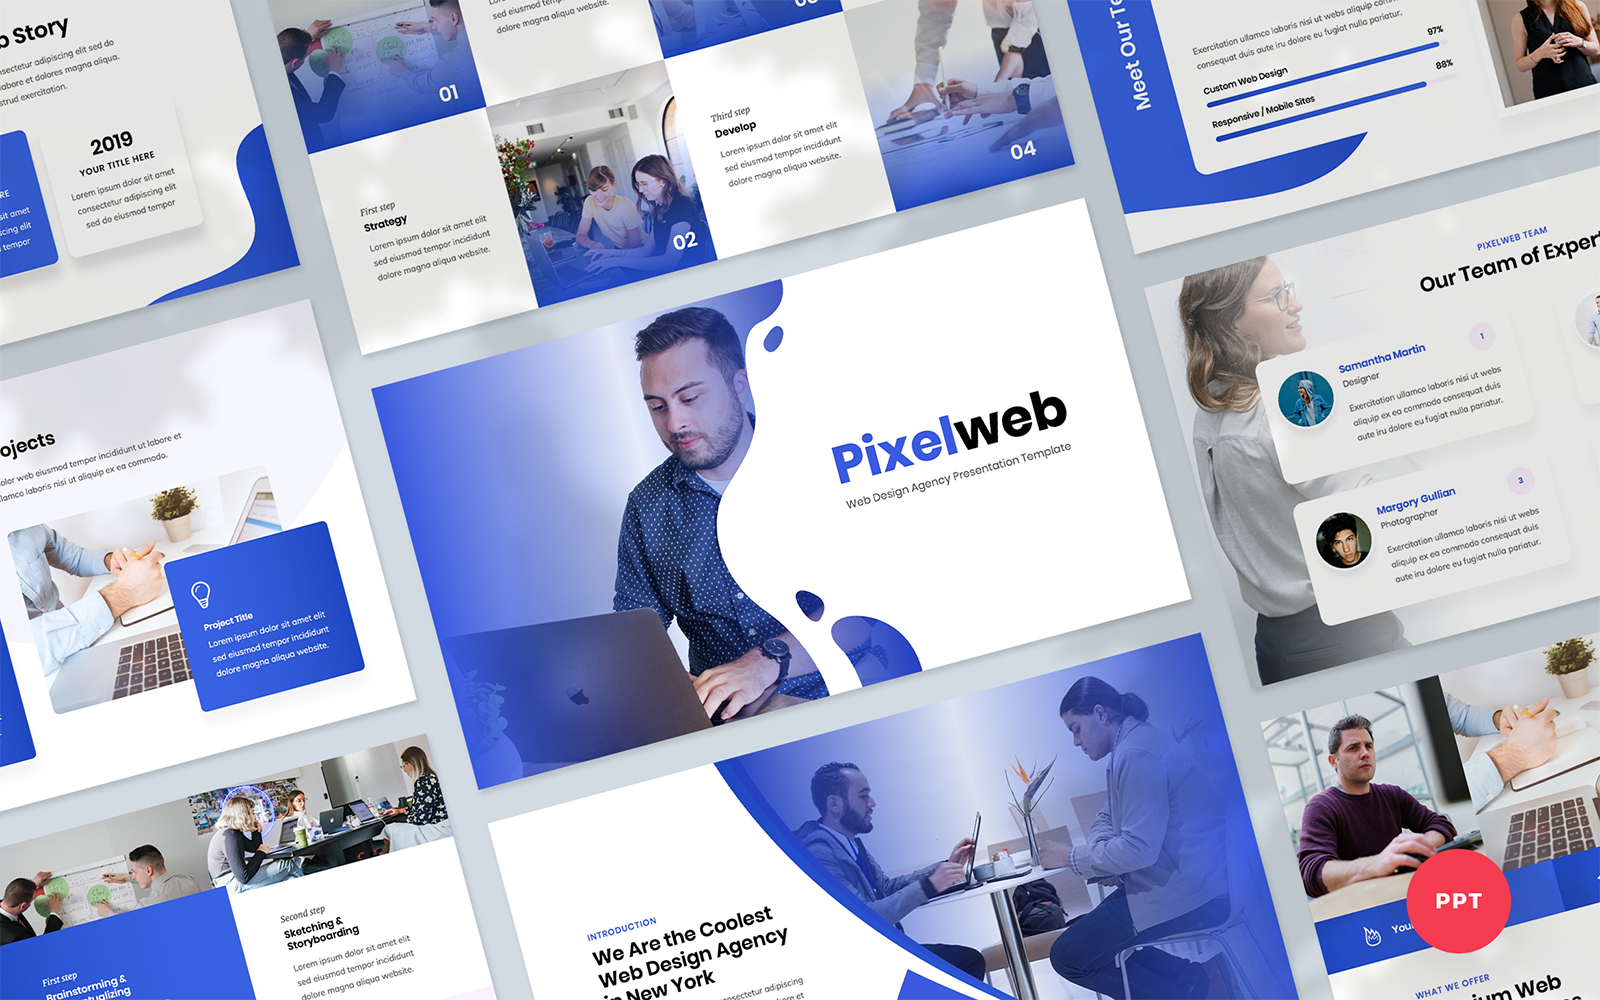 Pixelweb - Web Design Agency Presentation Template